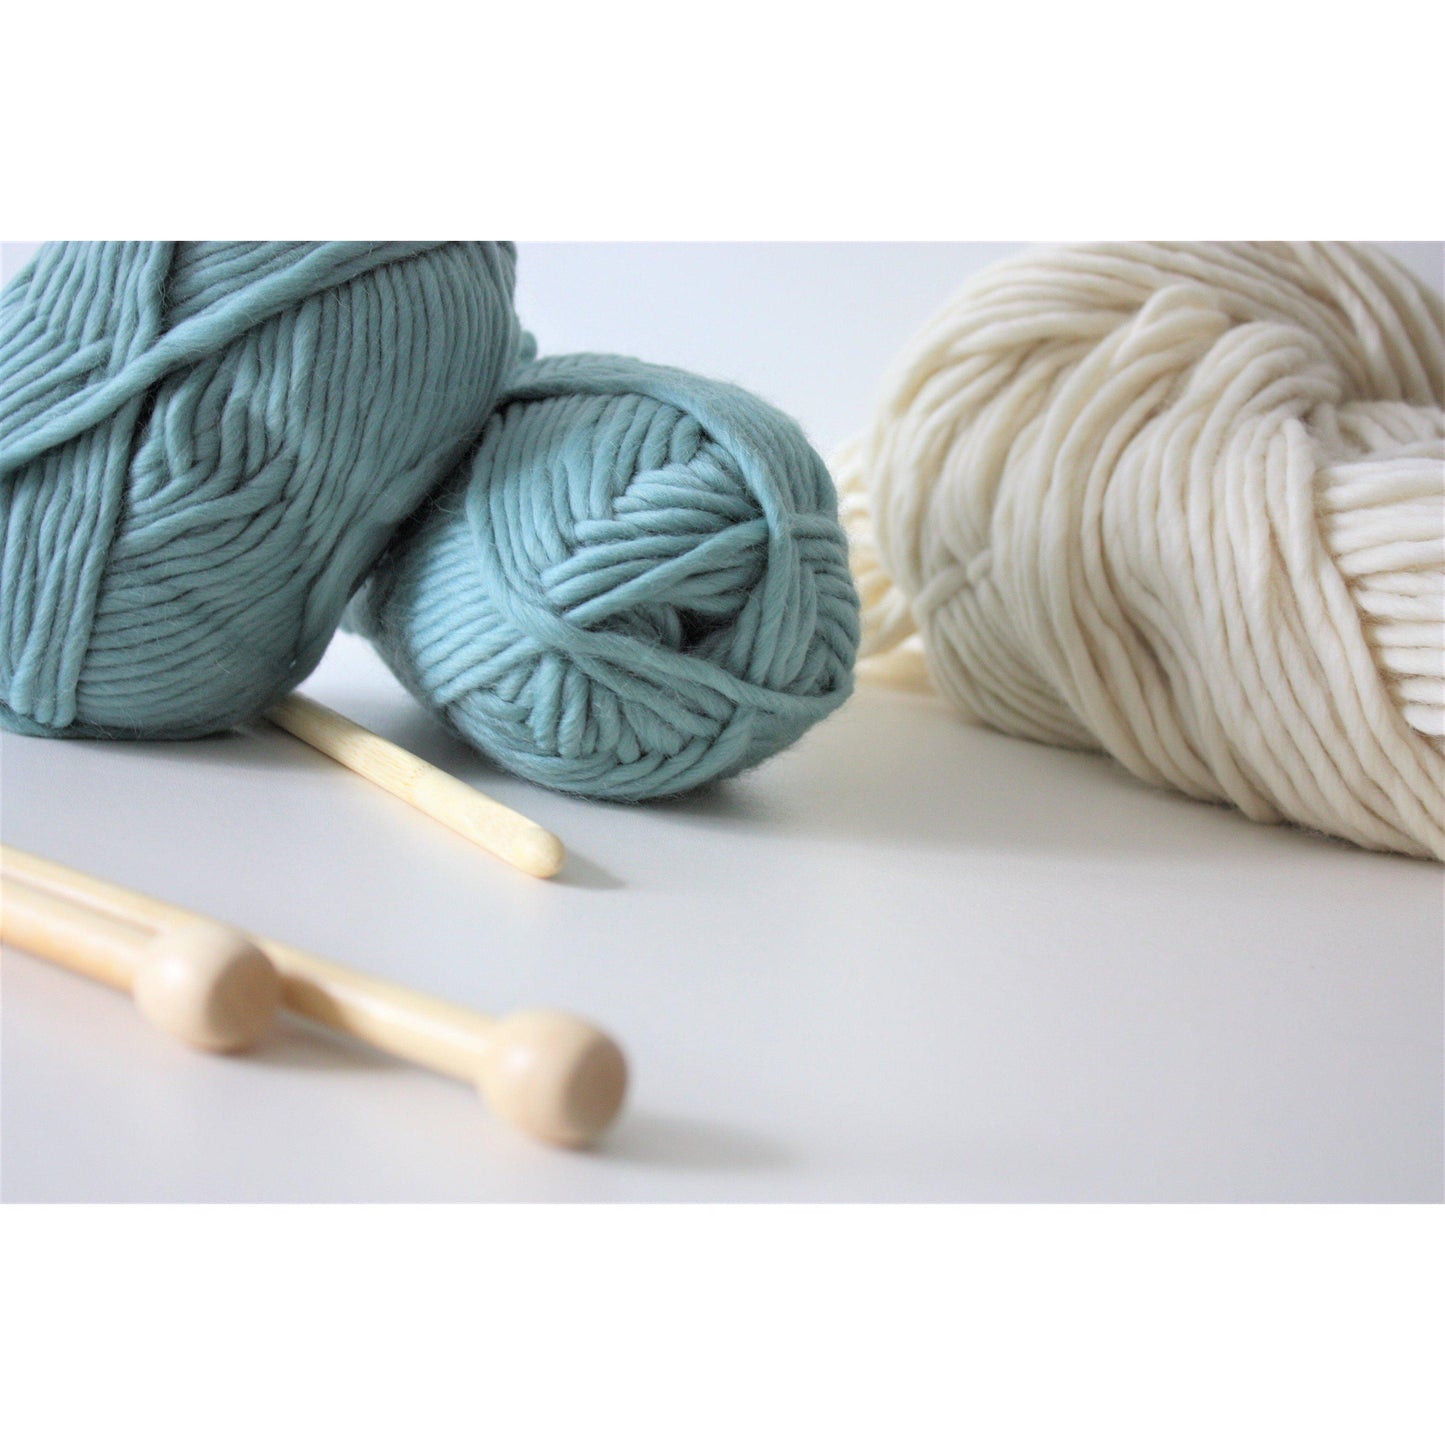 Super Chunky Merino Thick Knitting Yarn - Lilac Lavender - King & Eye